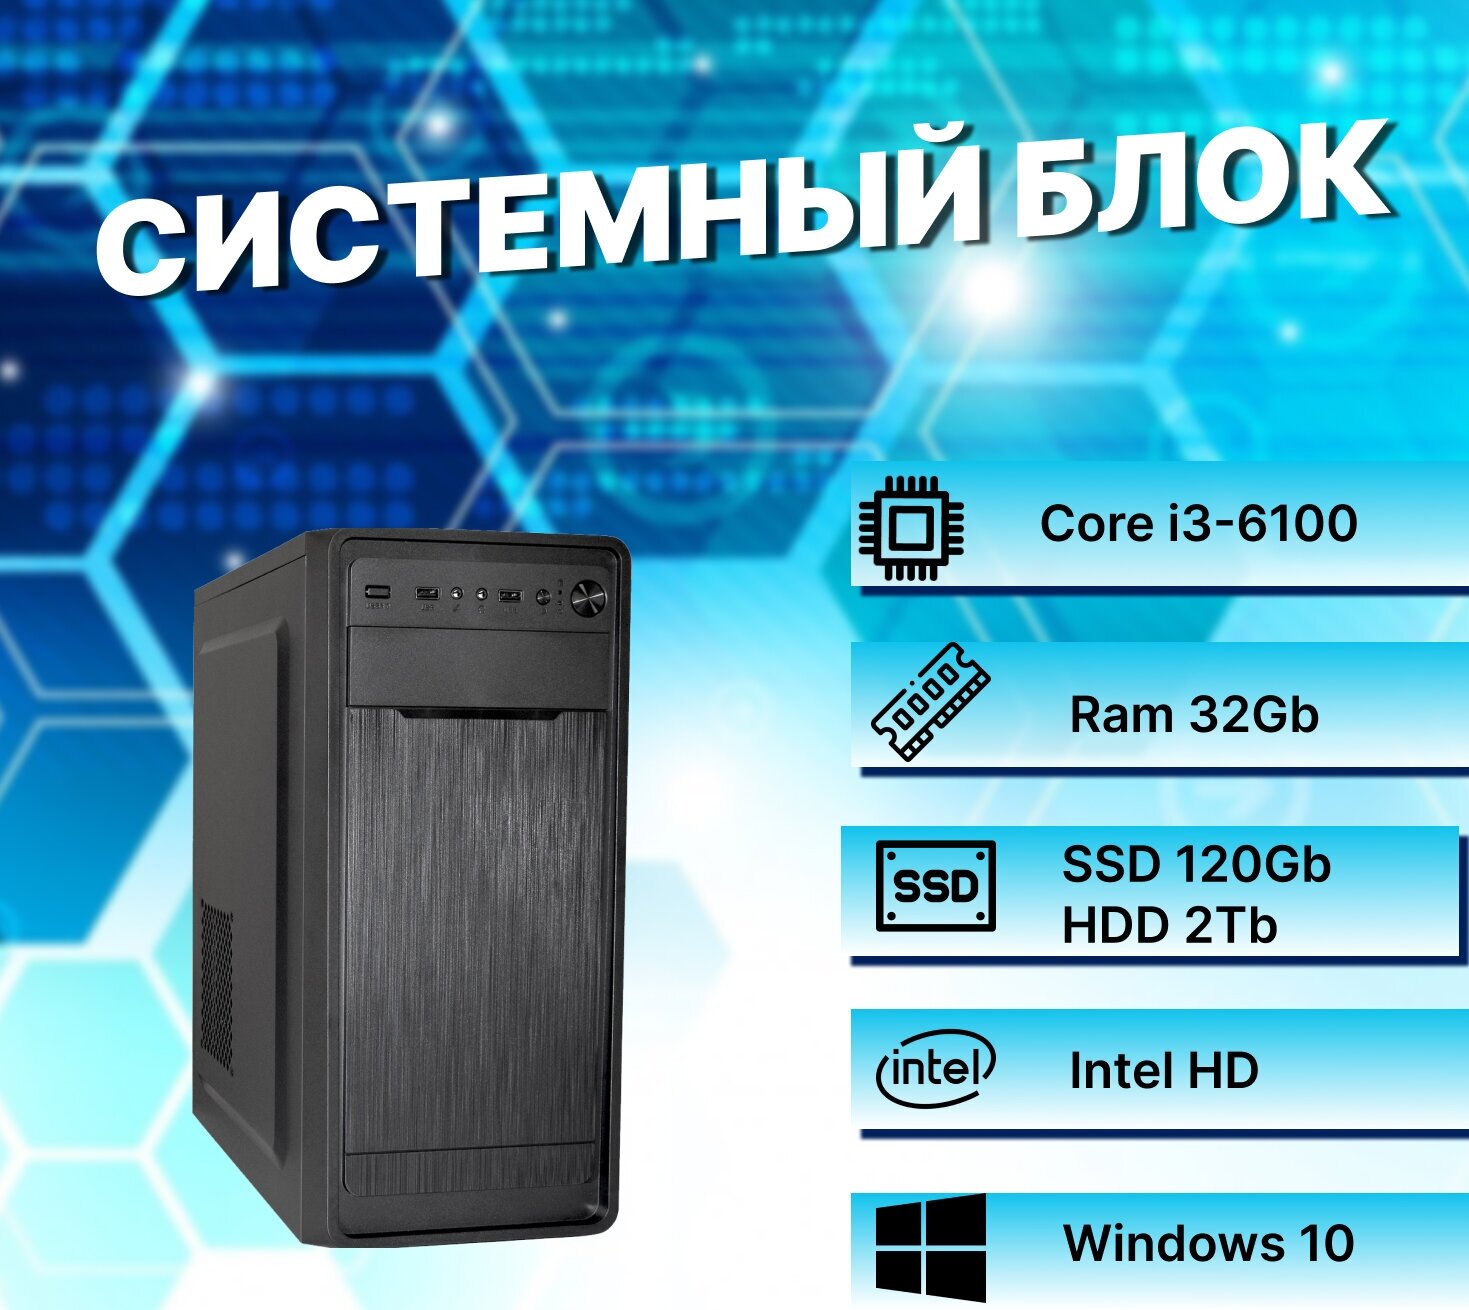 Системный блок Intel Core I3-6100 (3.7ГГц)/ RAM 32Gb/ SSD 120Gb/ HDD 2Tb/ Intel HD/ Windows 10 Pro